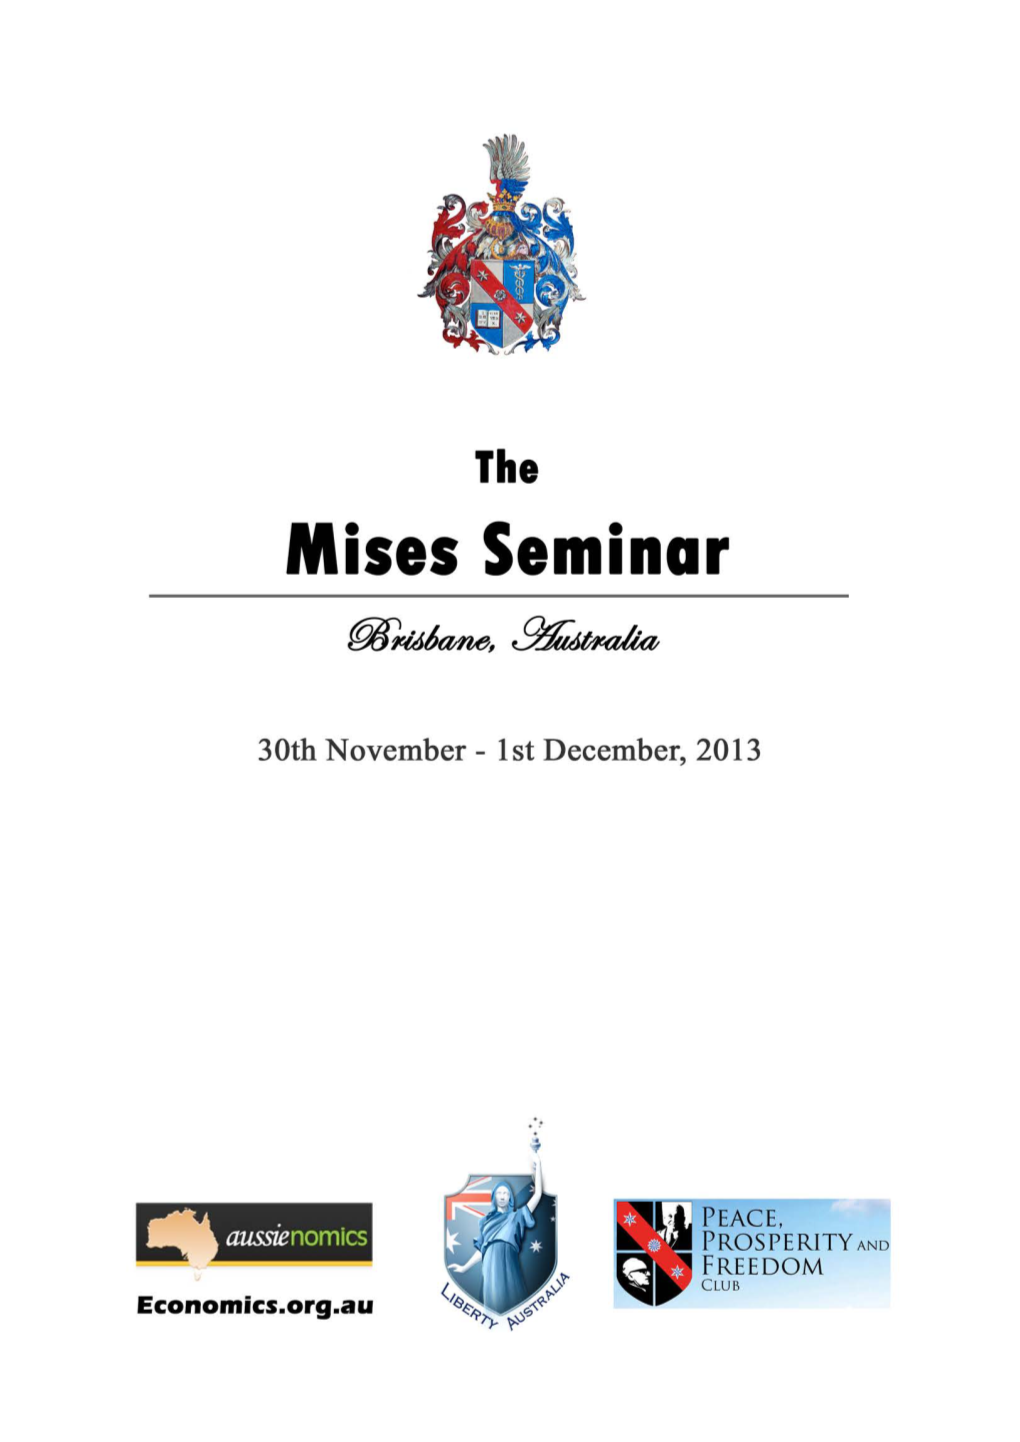 The Mises Seminar and Its Goals”